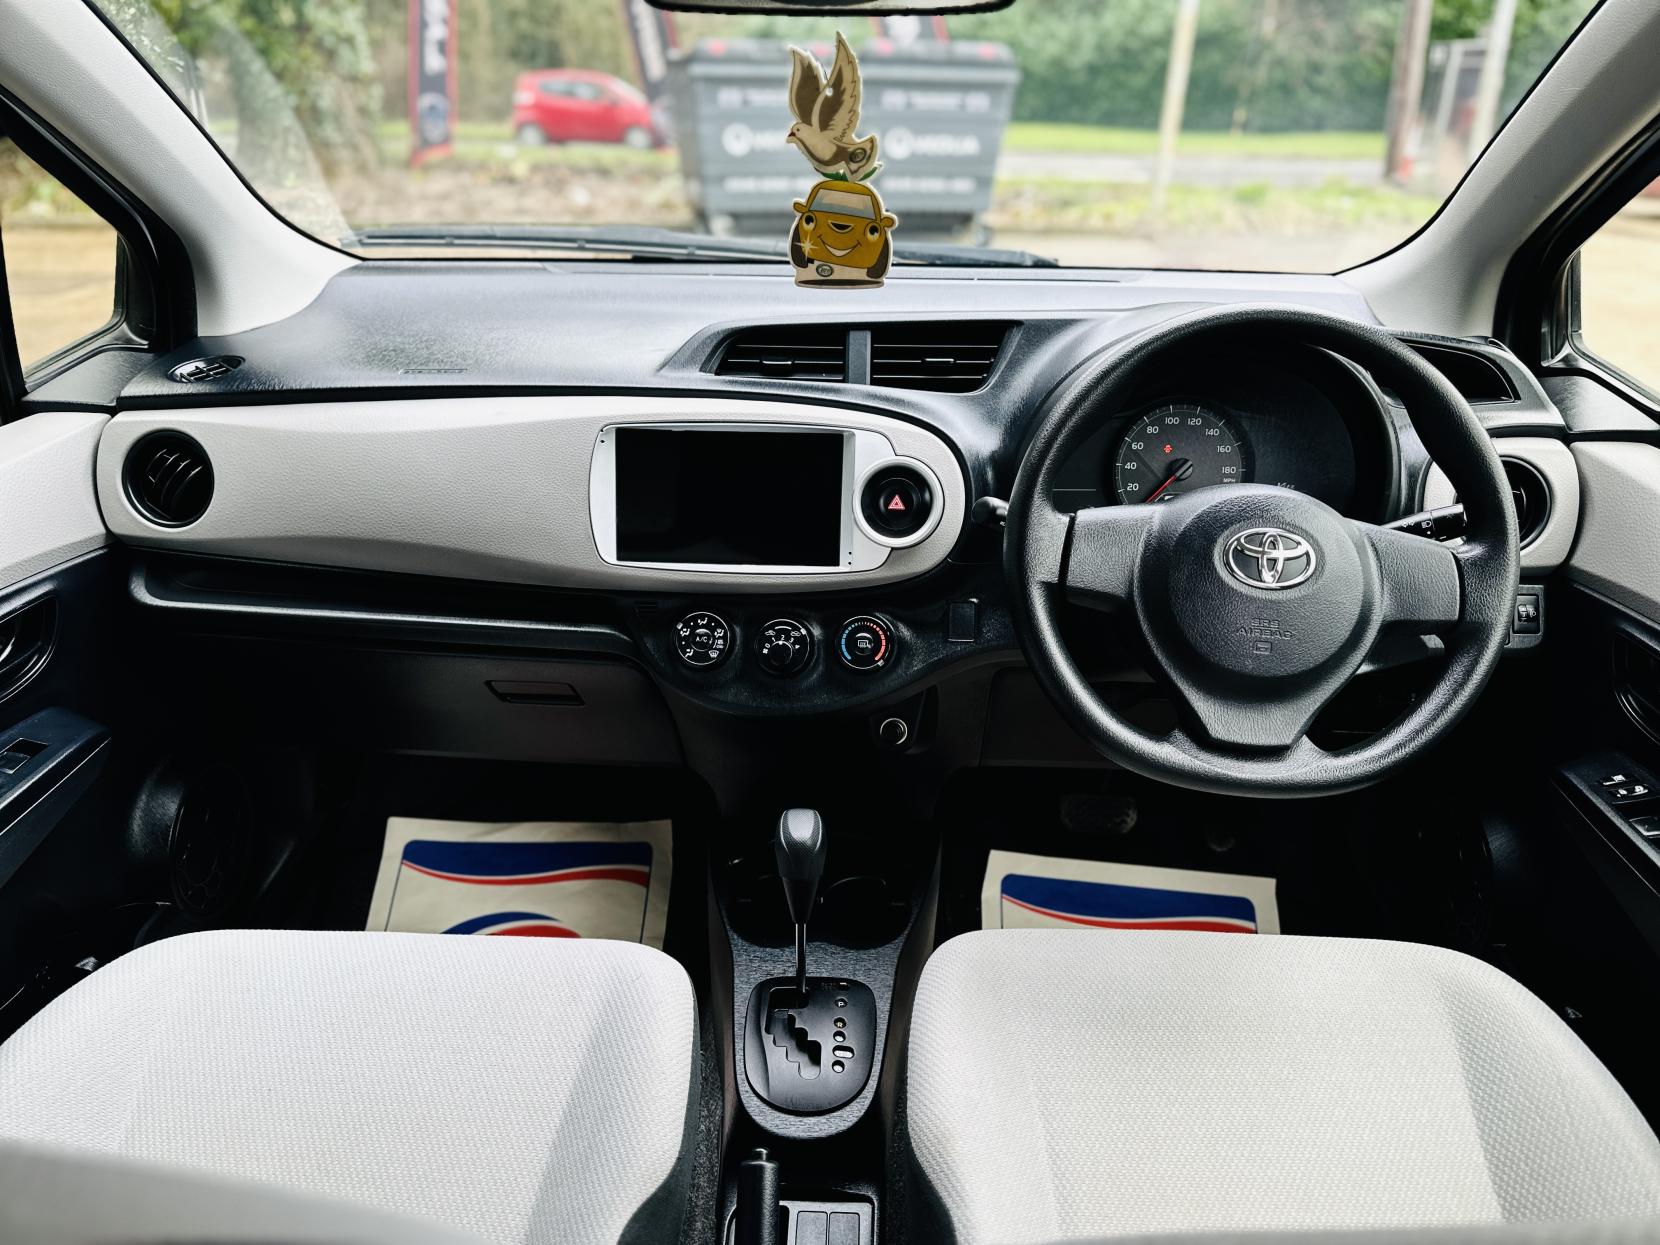 Toyota Yaris 1.3 Active Hatchback (2011 - 2015)